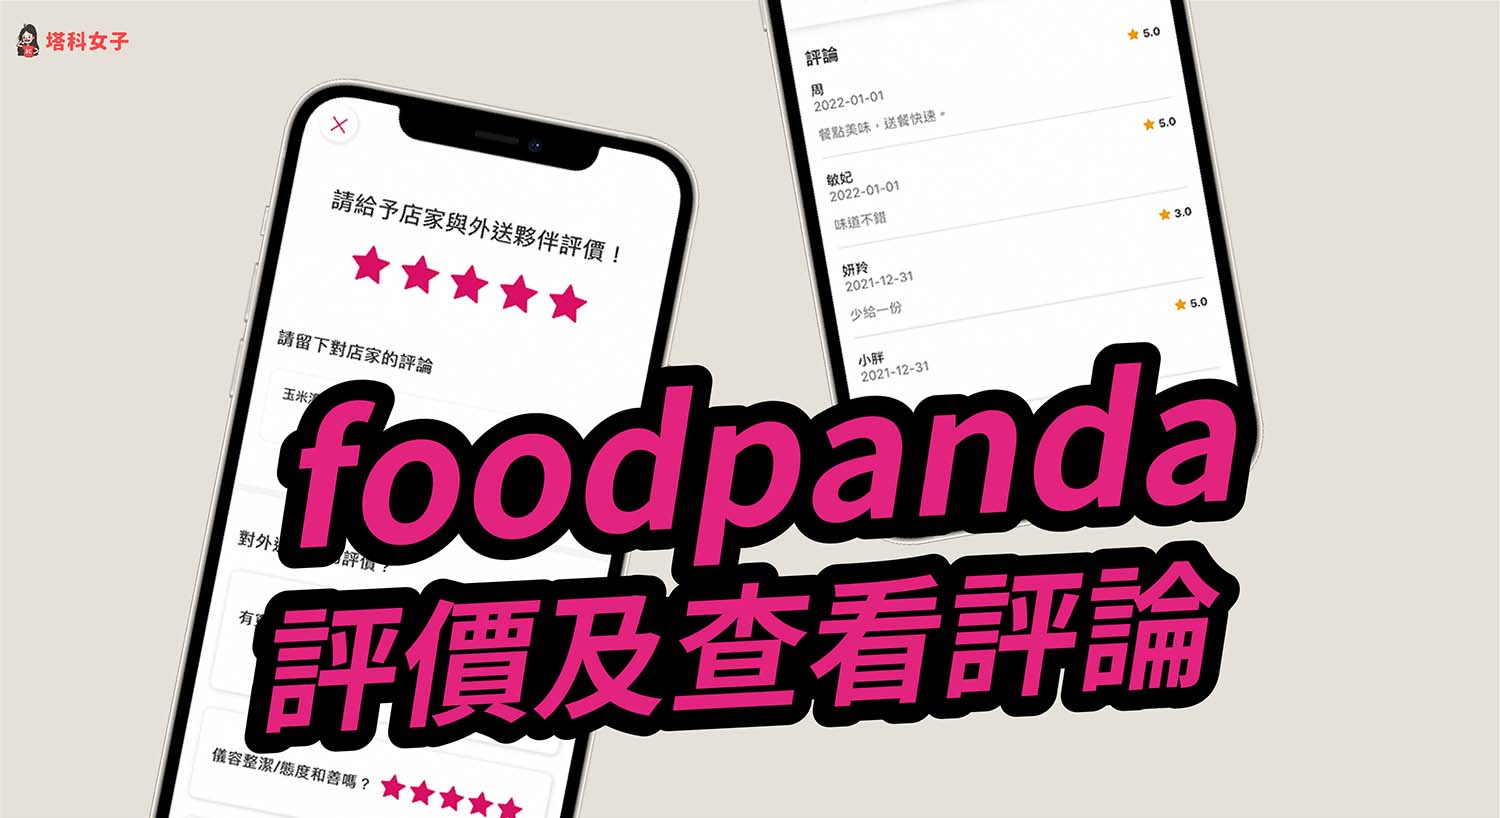 foodpanda 評價教學，教你評分外送員及查詢店家評論